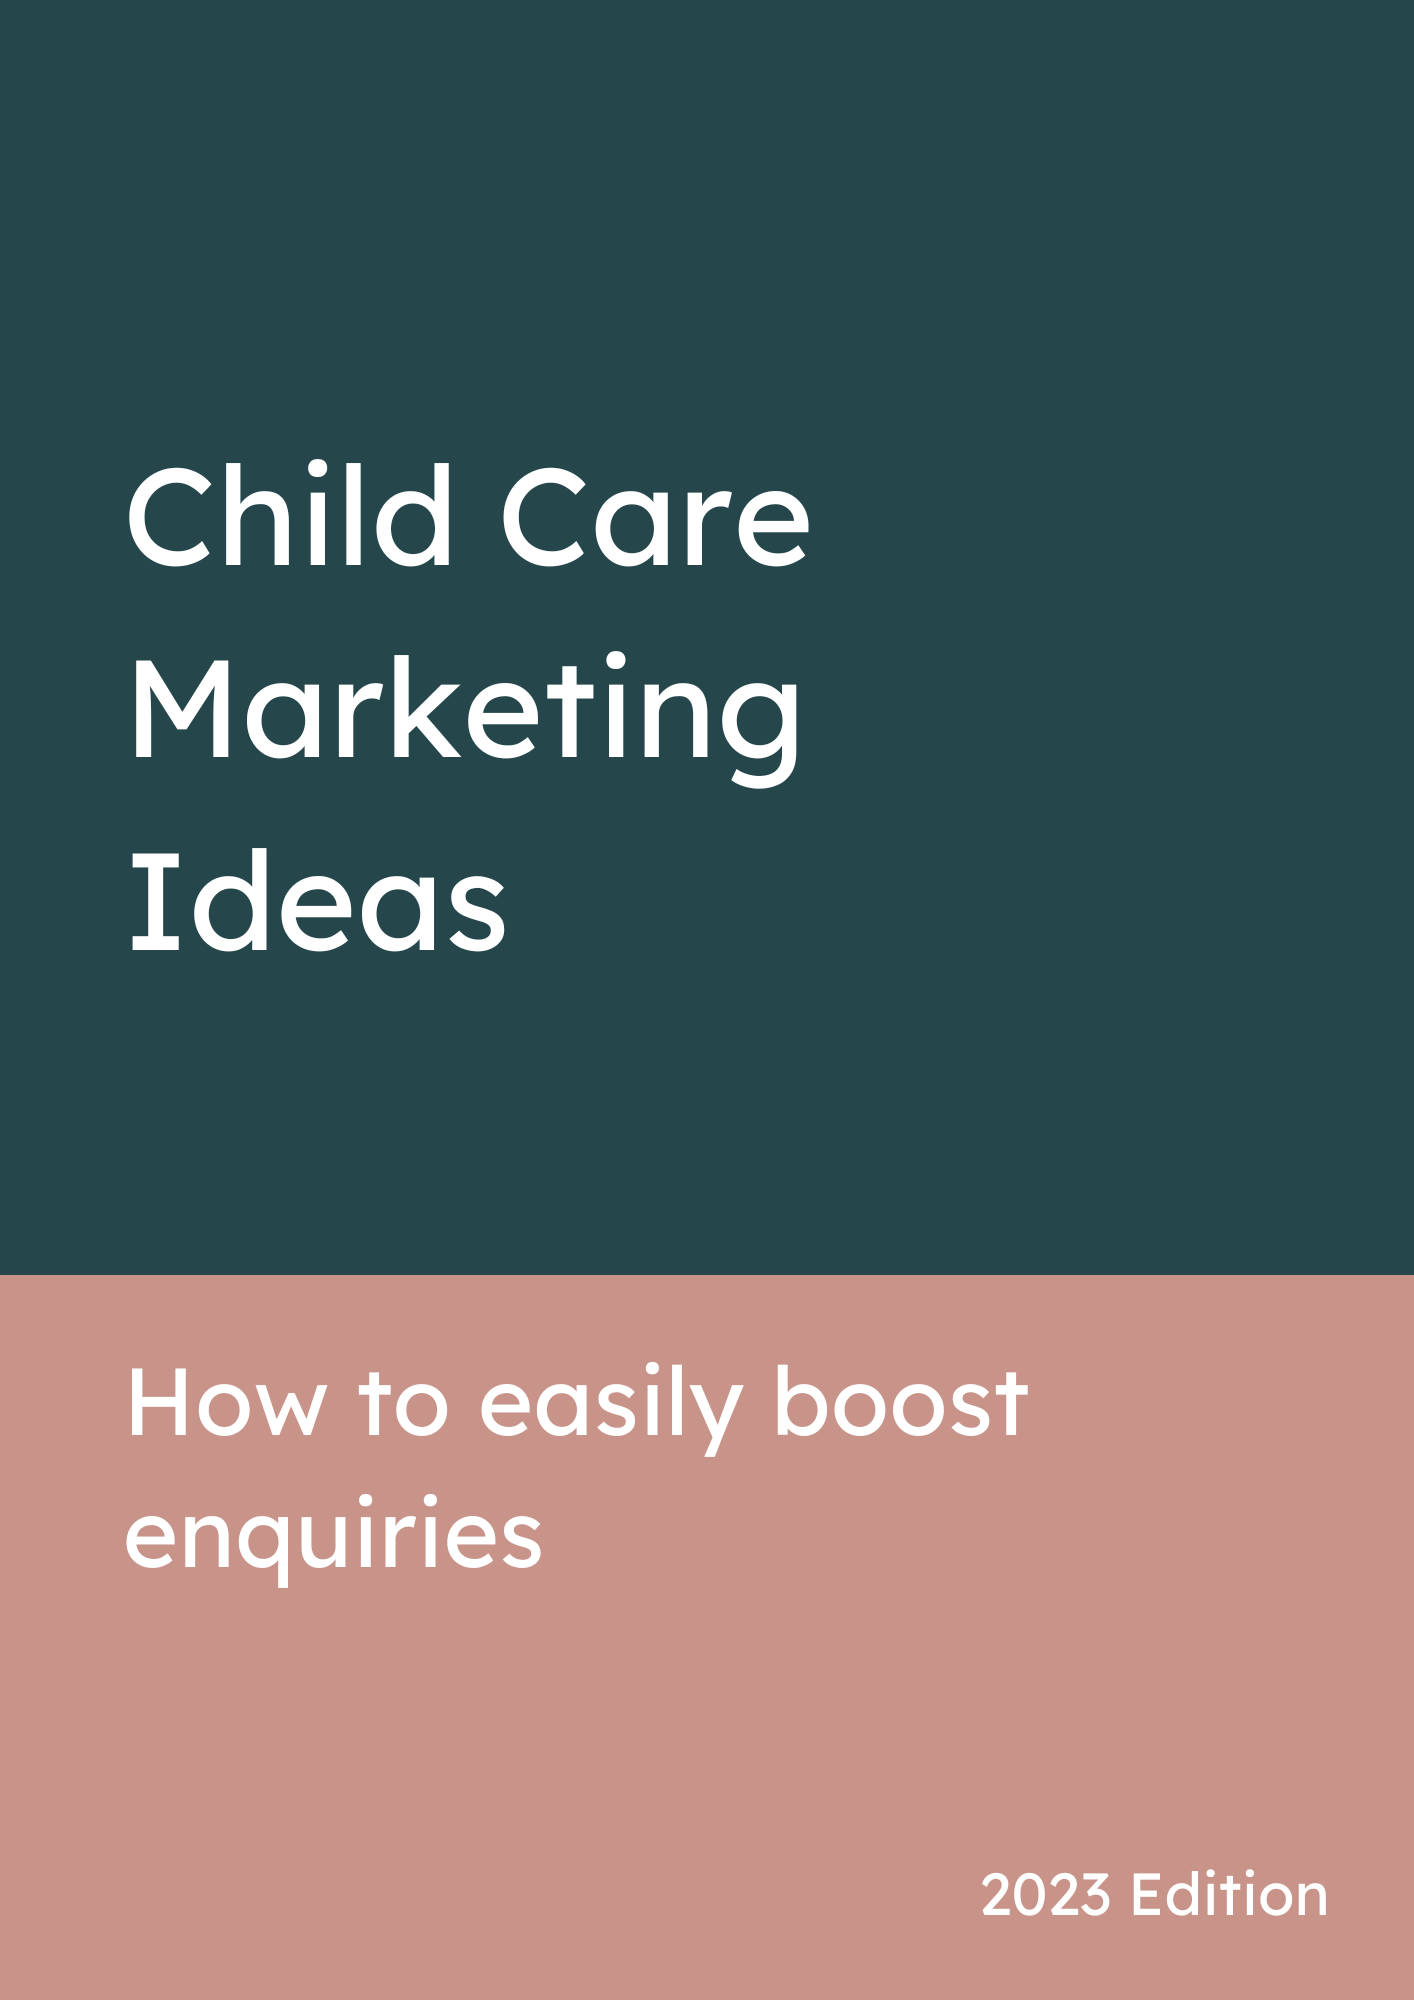 Child Care Marketing ideas